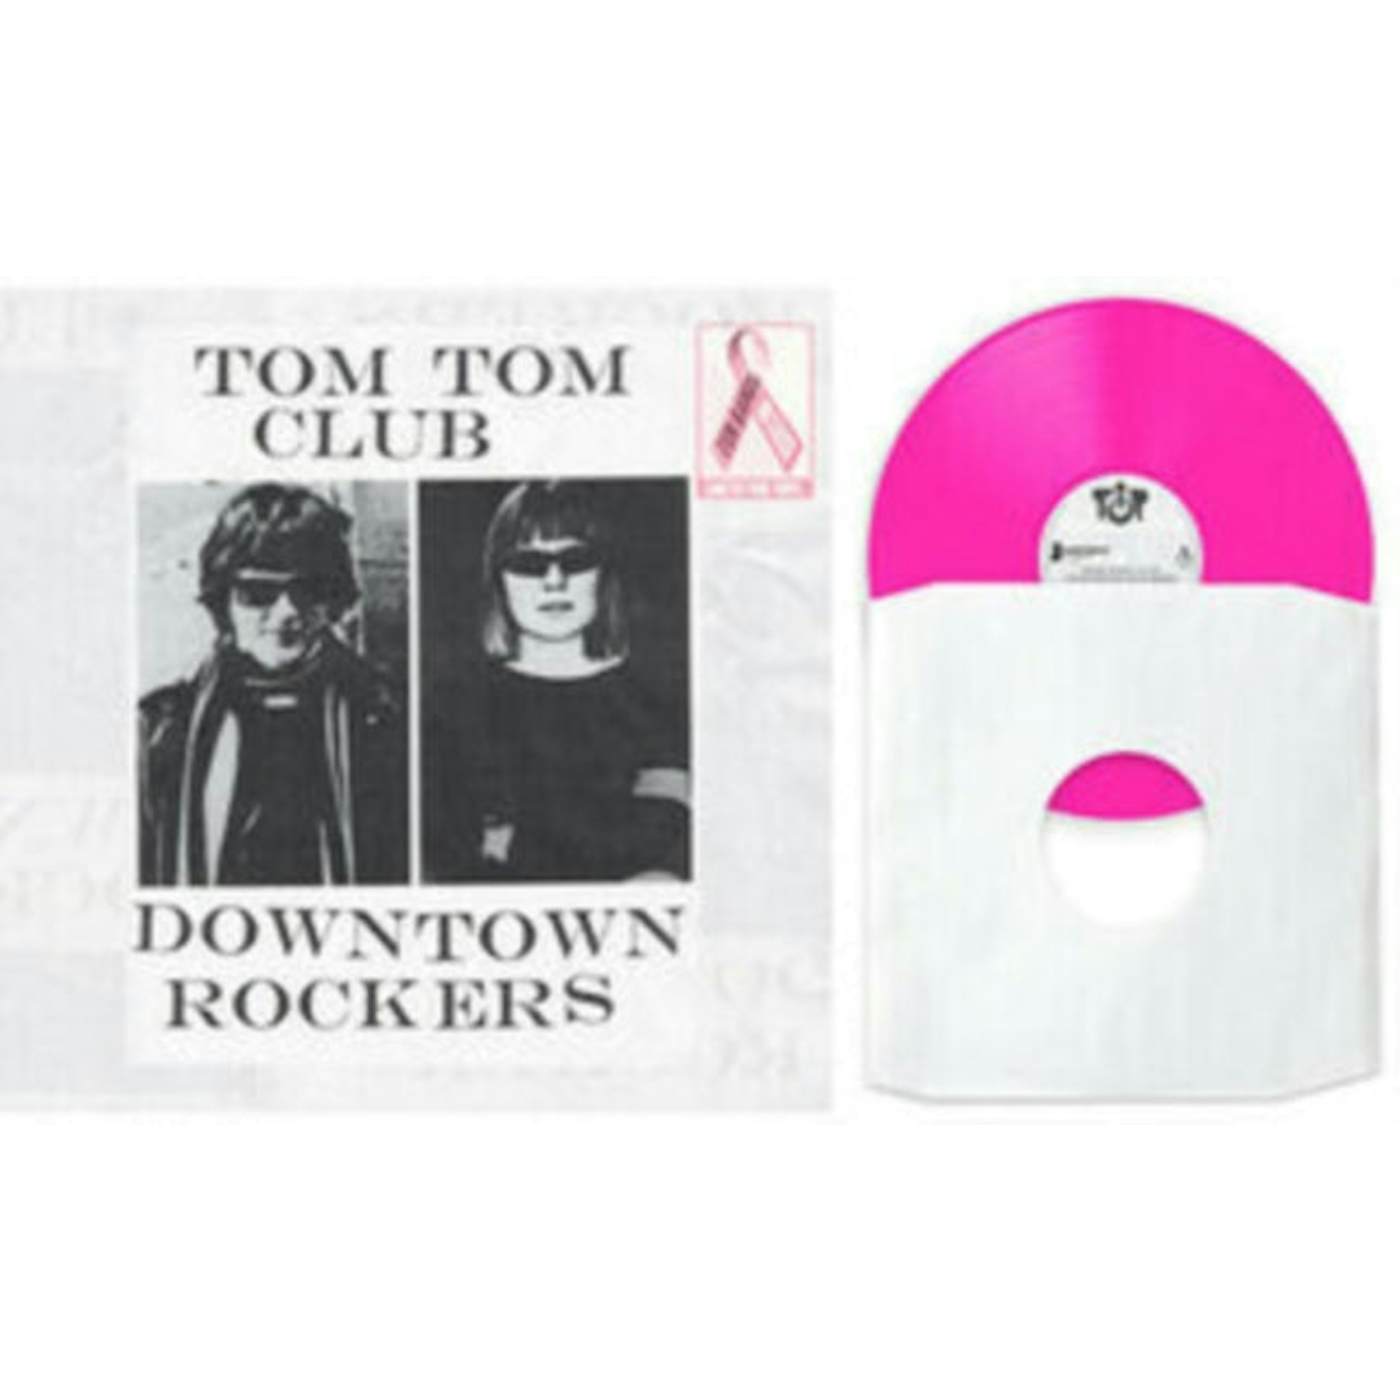 Tom Tom Club LP - Downtown Rockers (Pink Vinyl)